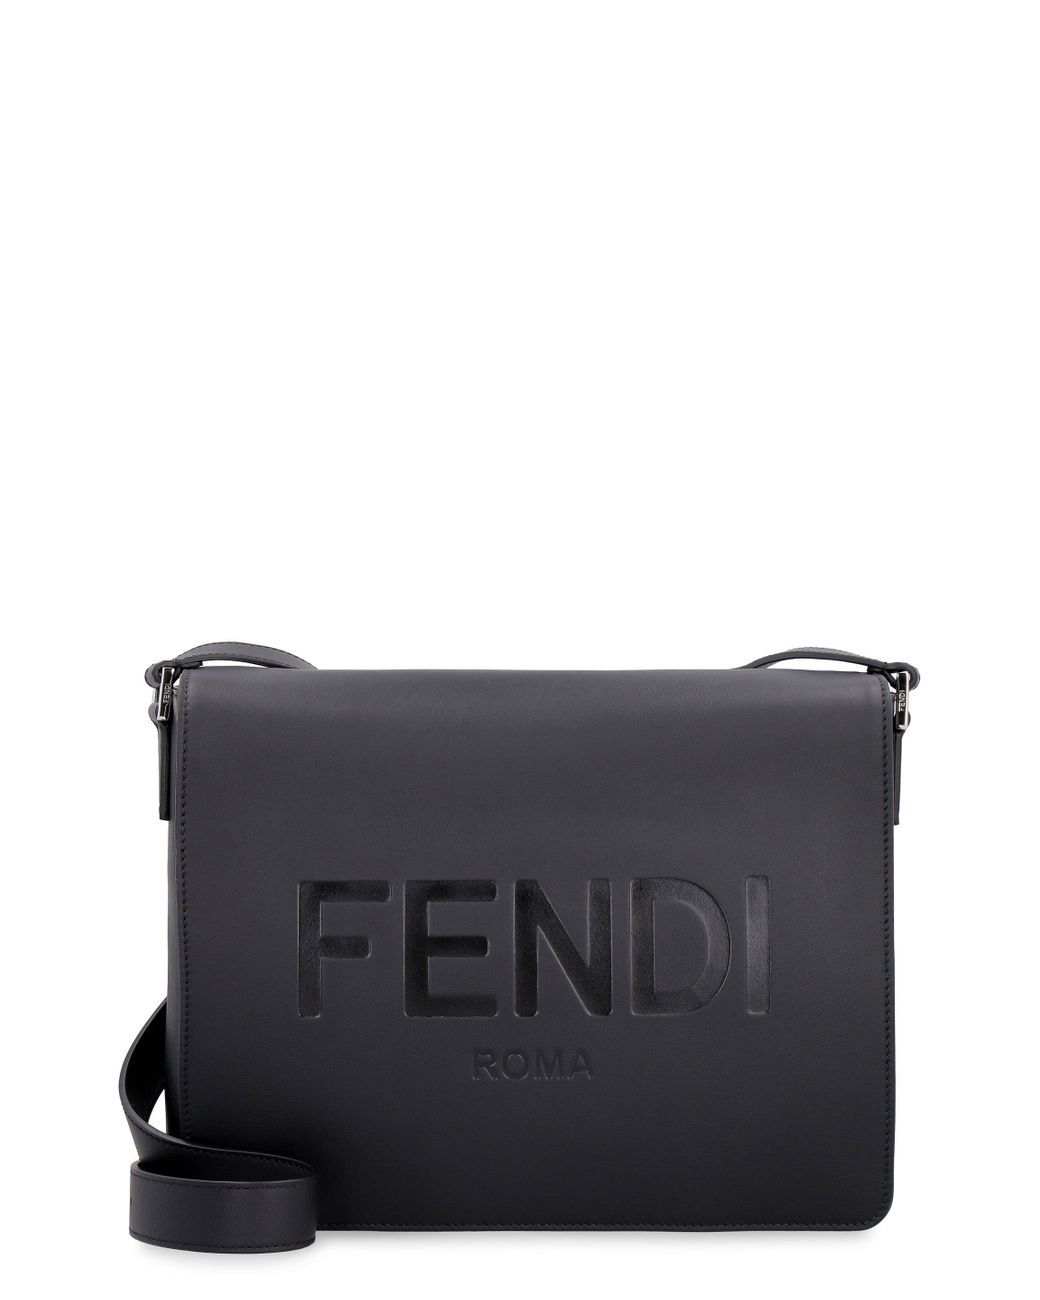 Fendi Leather Messenger Bag in Black for Men | Lyst